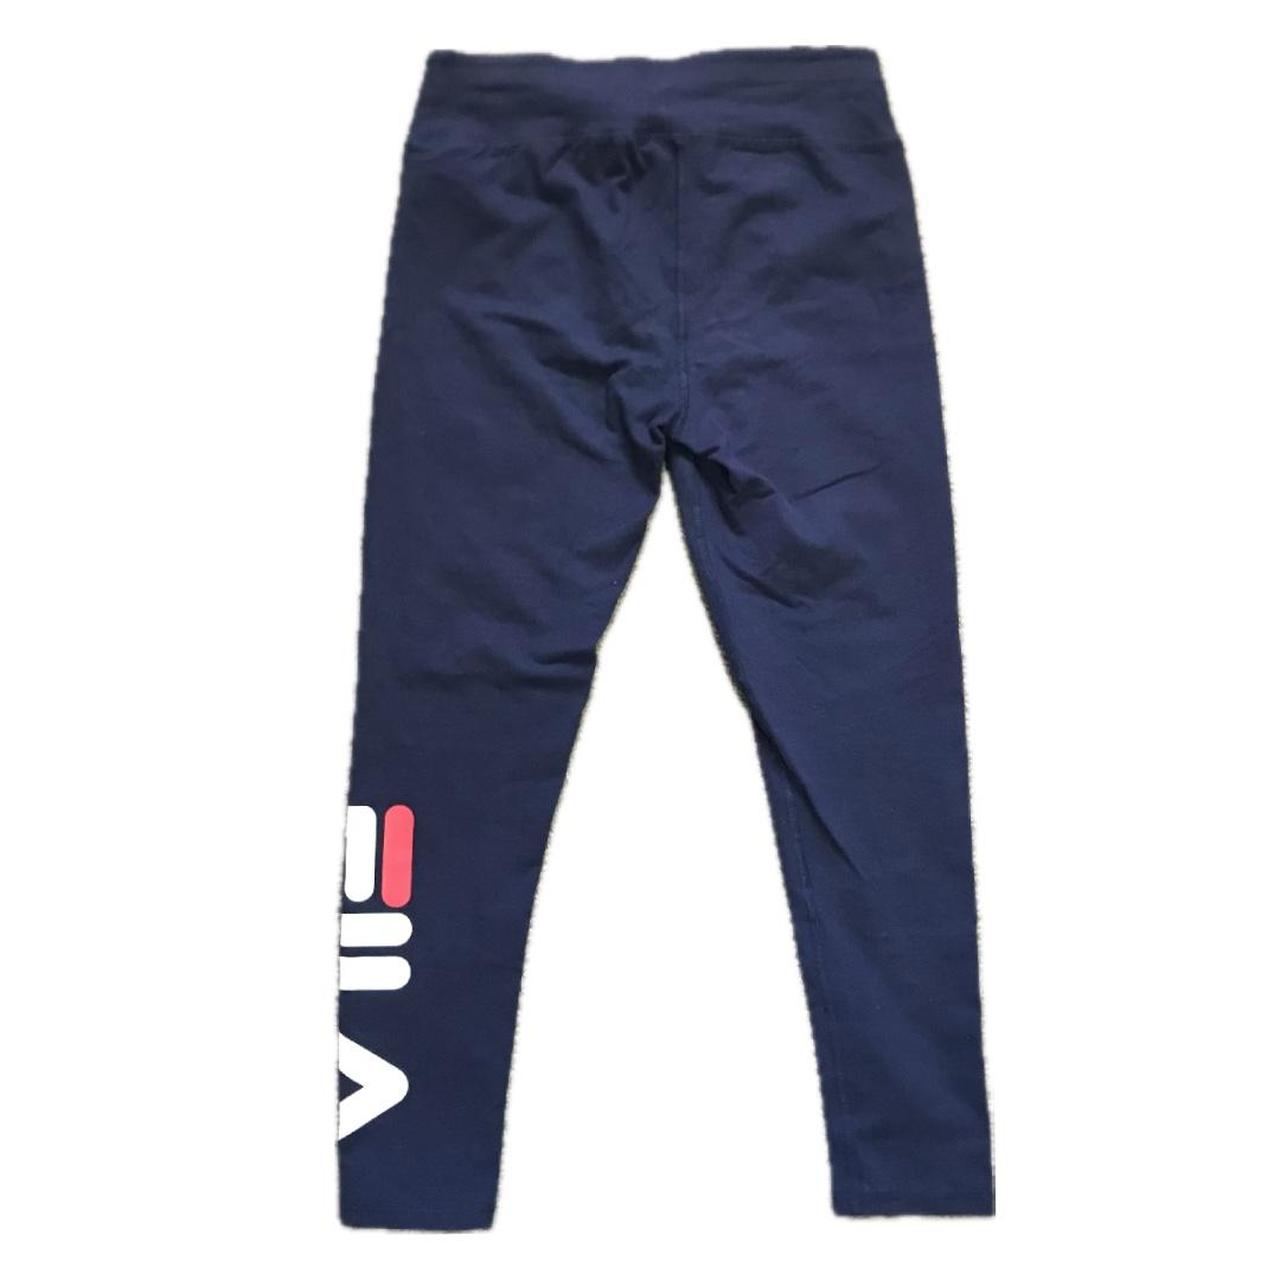 Dark blue/ navy blue fila leggings with embroidered - Depop